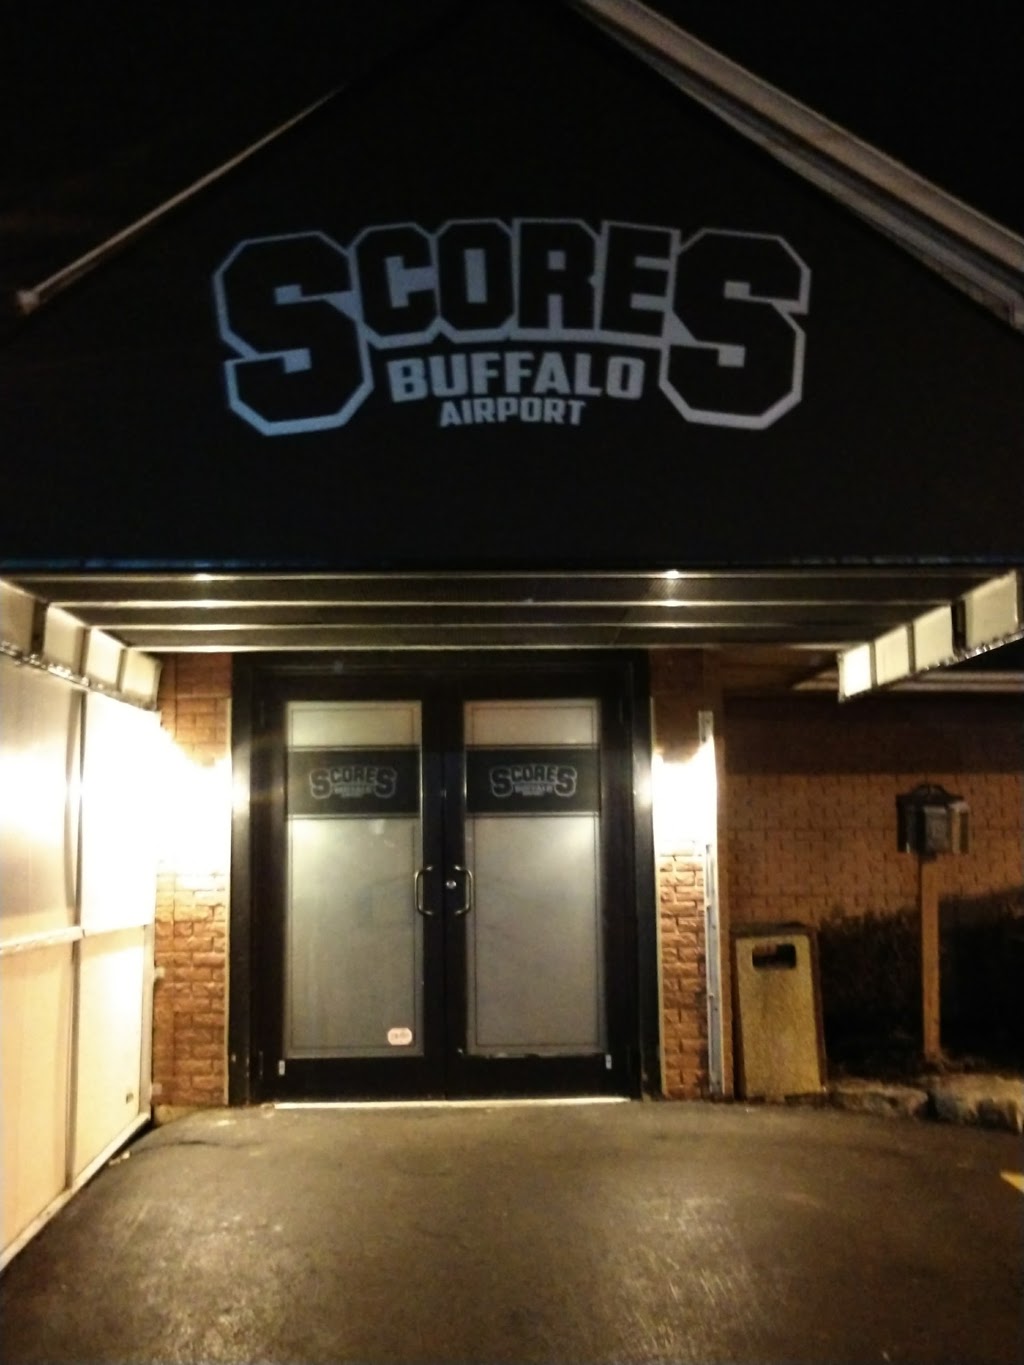 Scores Buffalo Airport | night club | 5111 Genesee St, Cheektowaga, NY 14225, USA | 7166812280 OR +1 716-681-2280